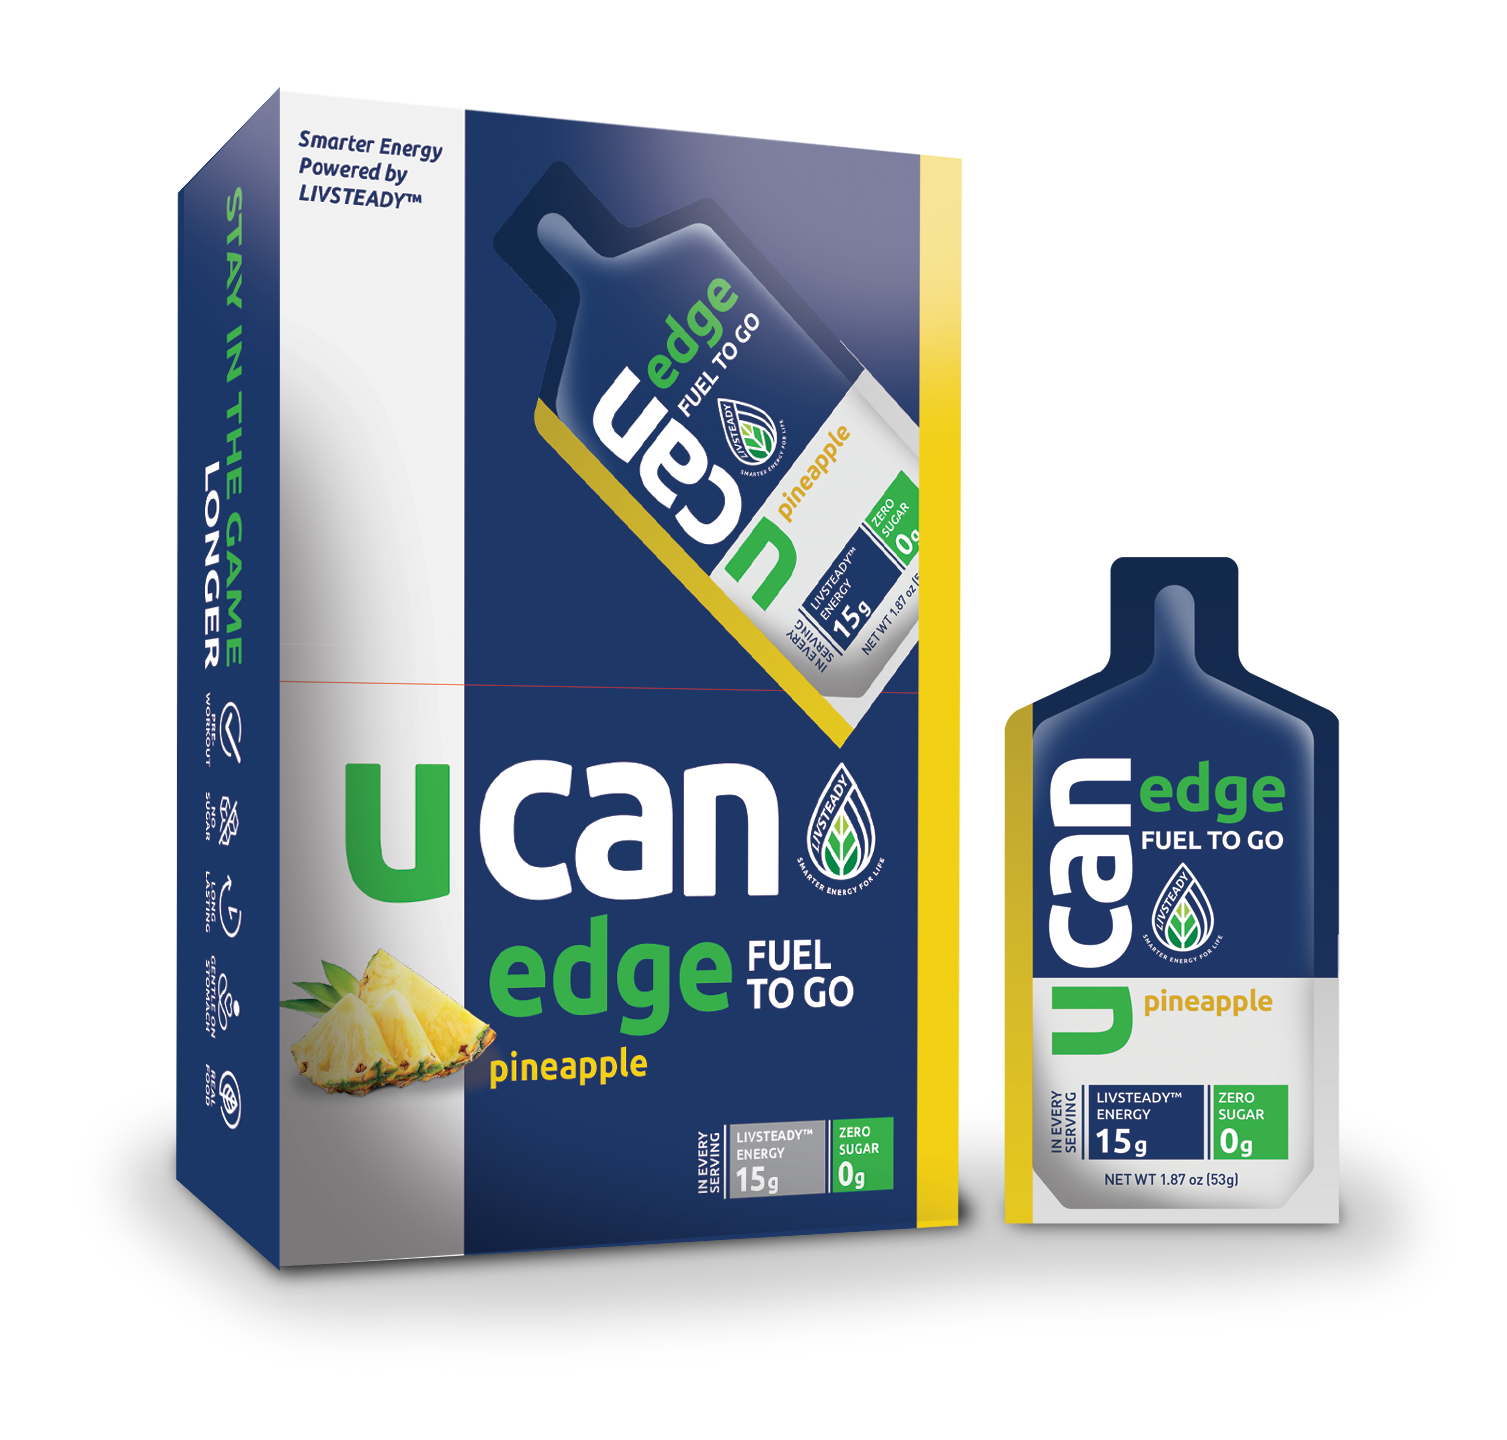 UCAN Edge Fuel to Go (Gel) - Pineapple 6 innerpacks per case 22.5 oz